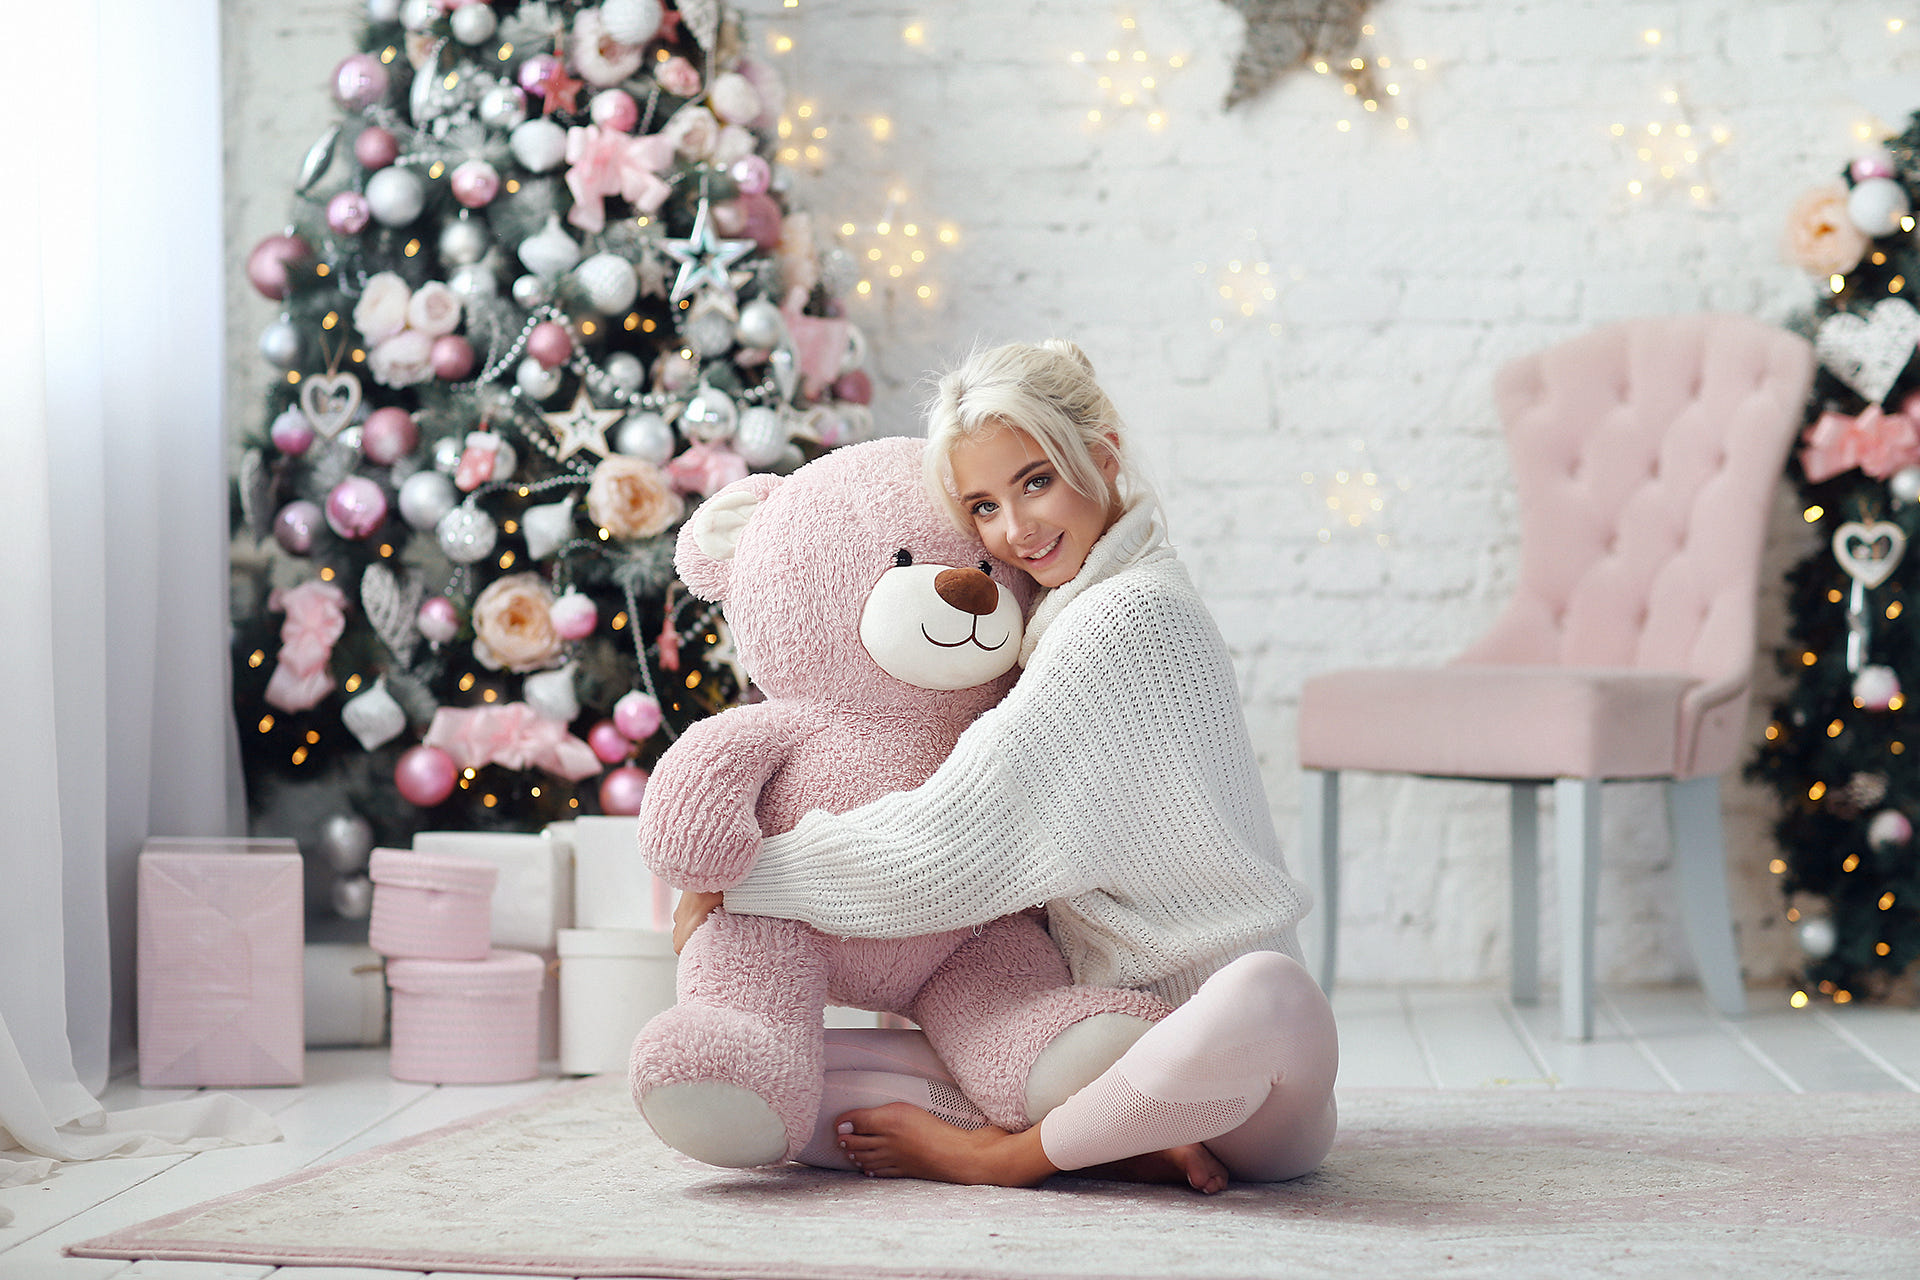 Women Hairbun Dmitry Arhar Christmas Tree Smiling Teddy Bears Chair Presents On The Floor White Swea 1920x1280